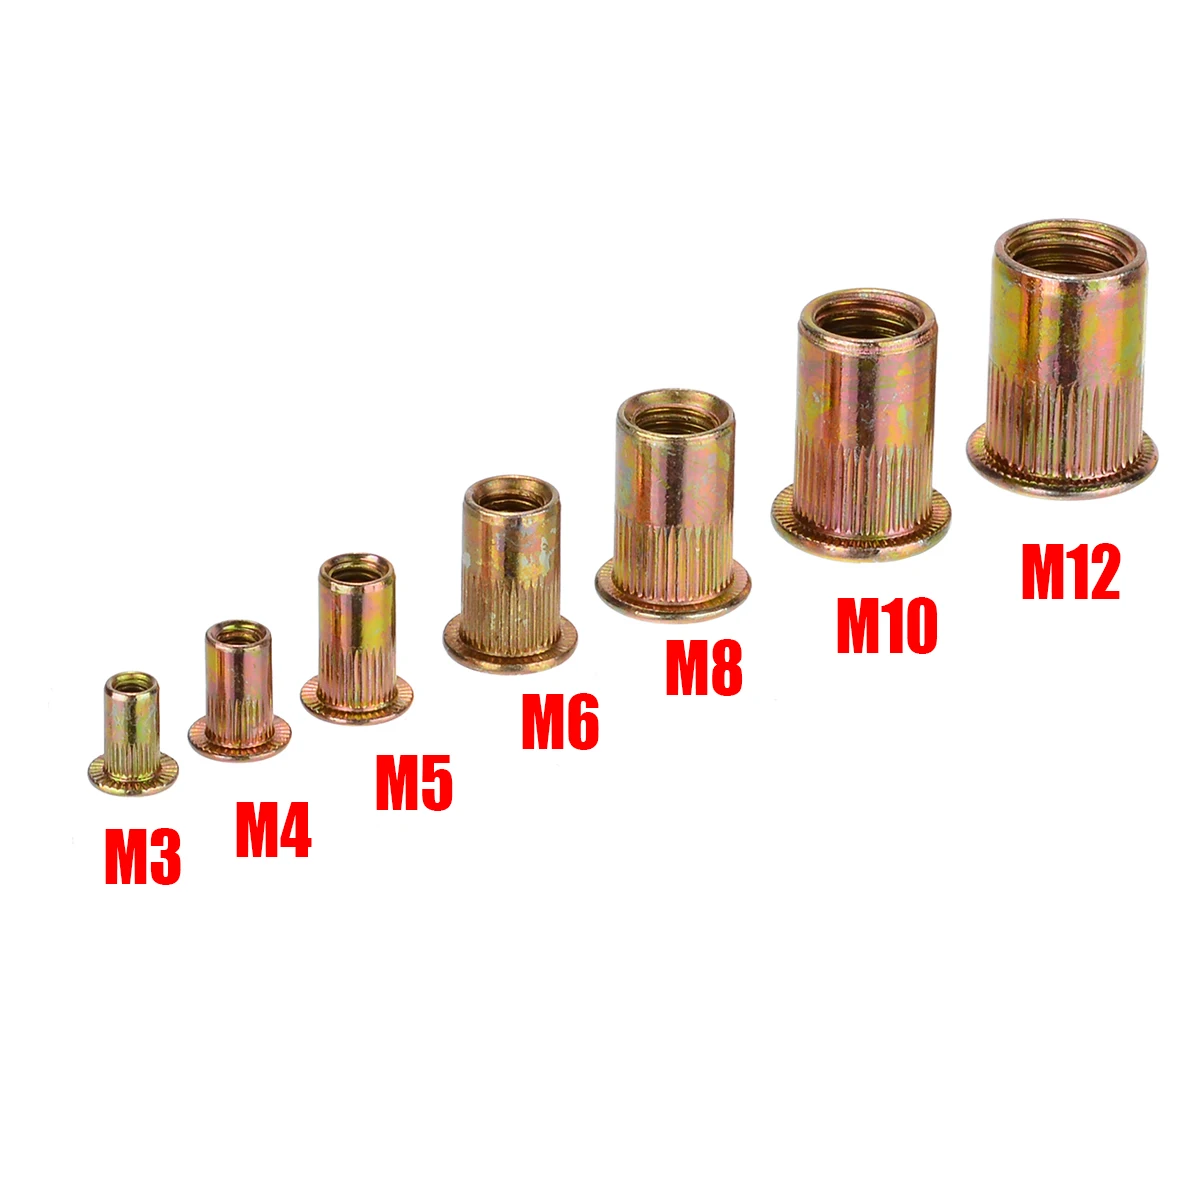 

165pcs/set M3 M4 M5 M6 M8 M10 M12 Rivet Nut Kit Mixed Carbon Steel Zinc Plated Rivnut Insert Nutsert Flat Head Threaded